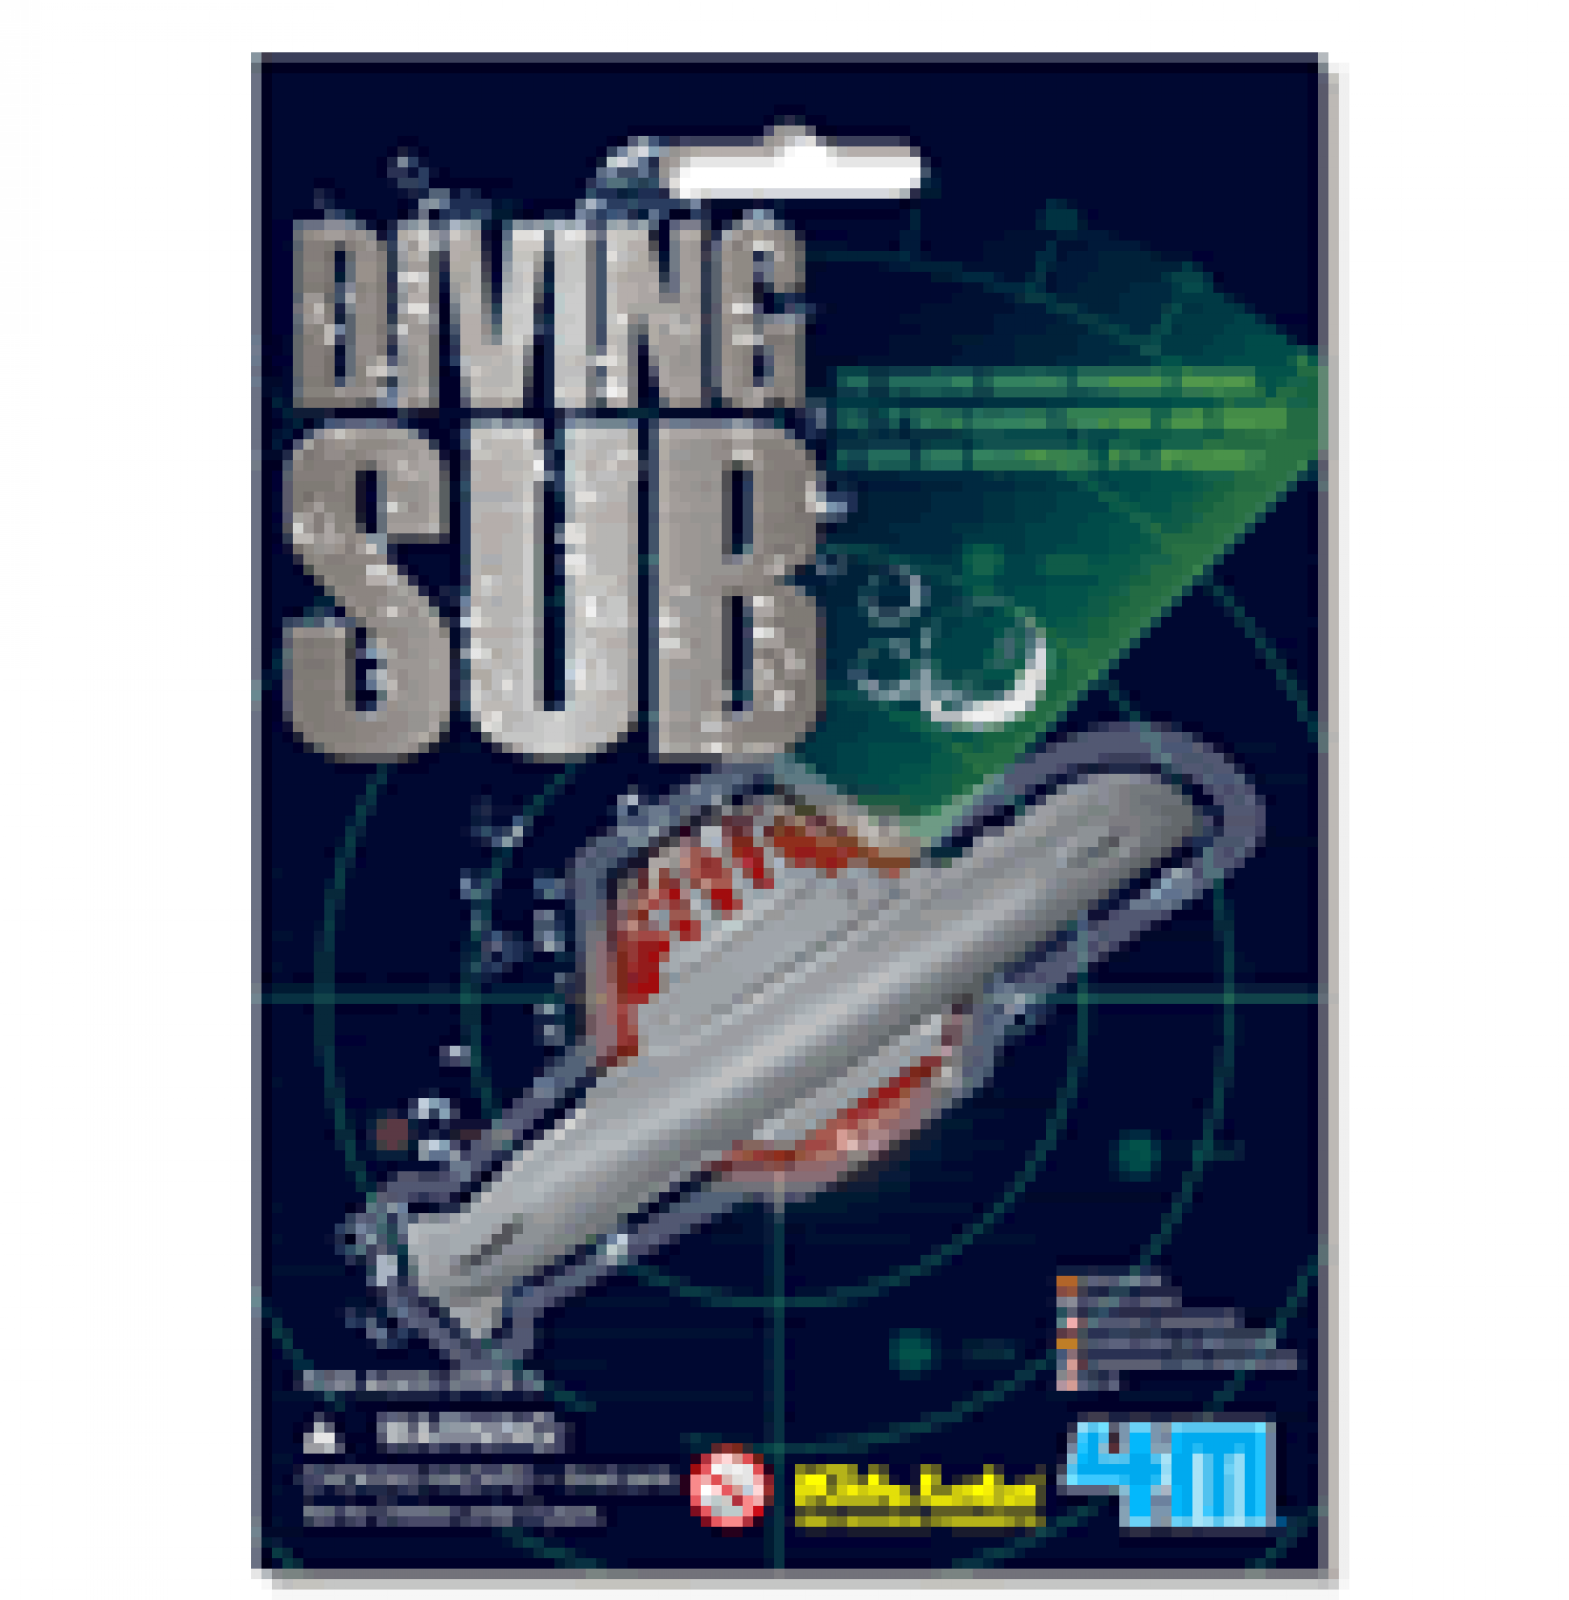 Diving Submarine Mini Bath Toy Kidz Labs thumbnails